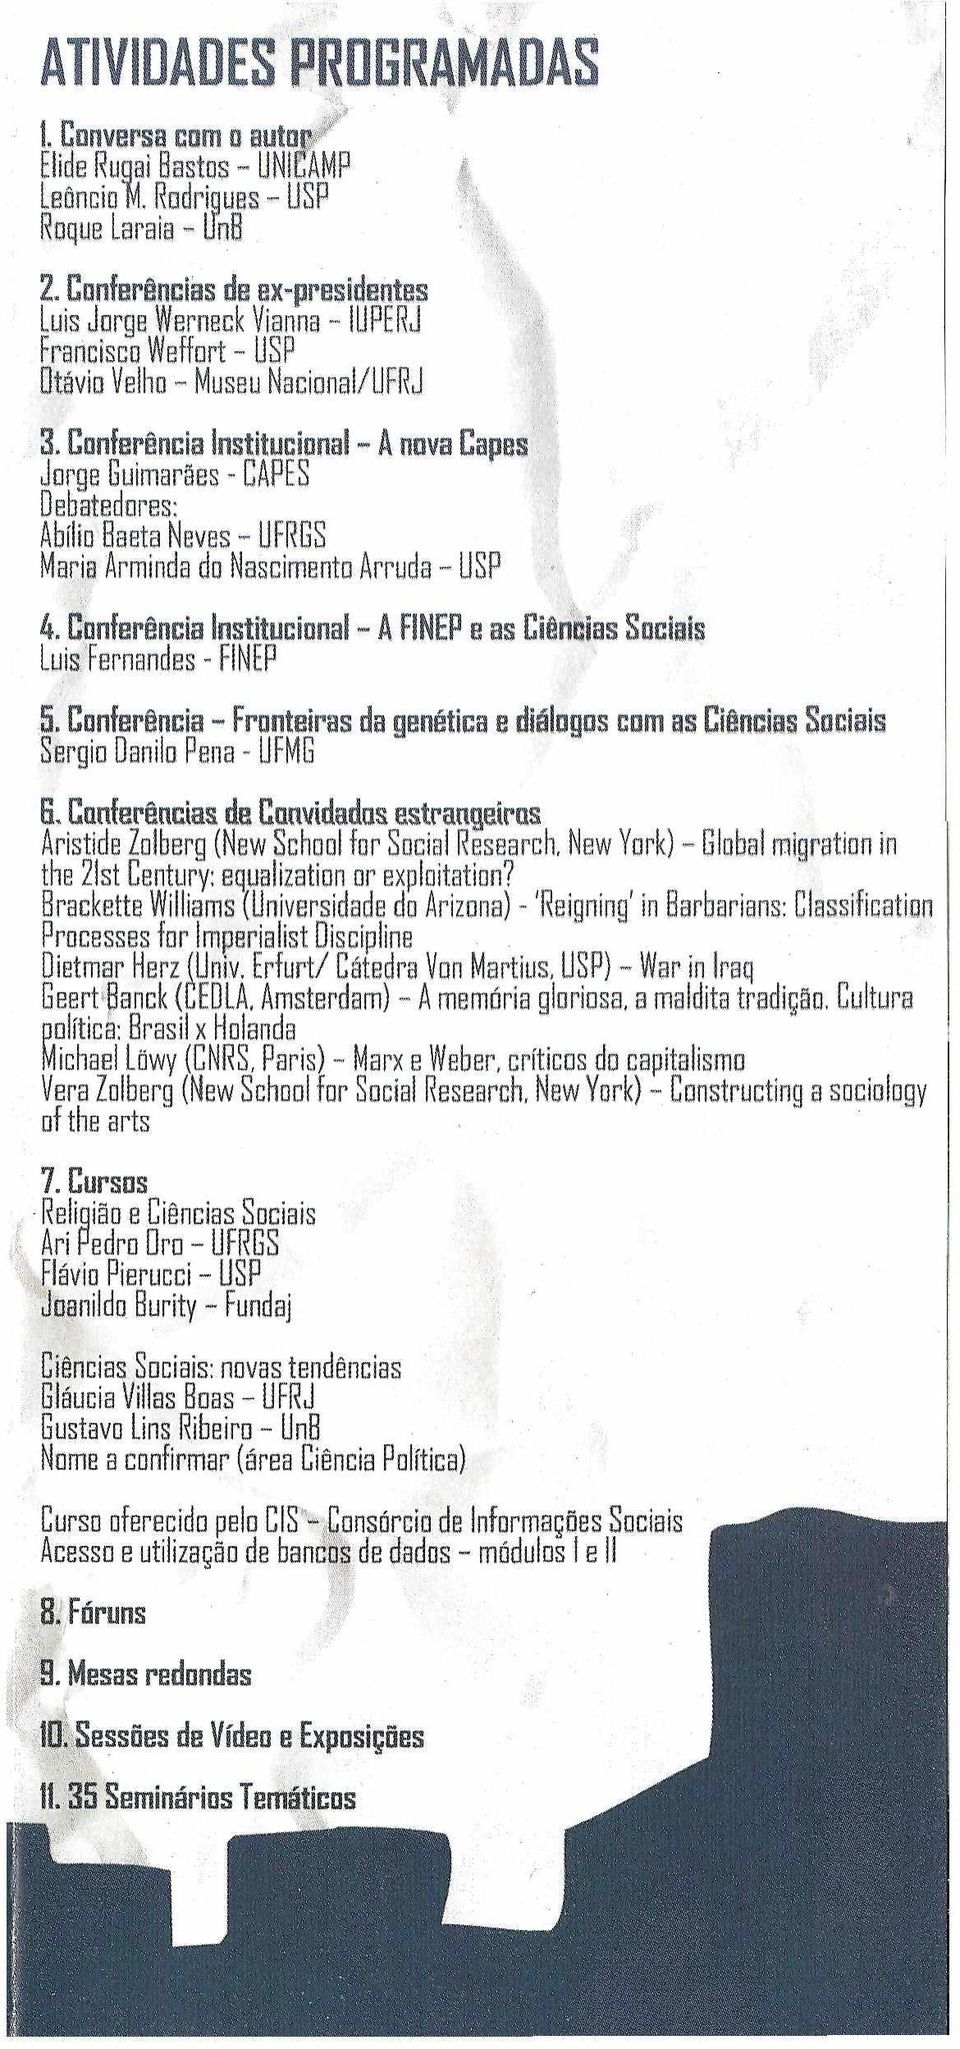 C onferência In stitu cio n a l - A nova Capes Jorge Guimarães - CAPES Debatedores: Abílio Baeta Neves - UFRGS Marie 'Arminda do Nascimento Arruda - USP 4.